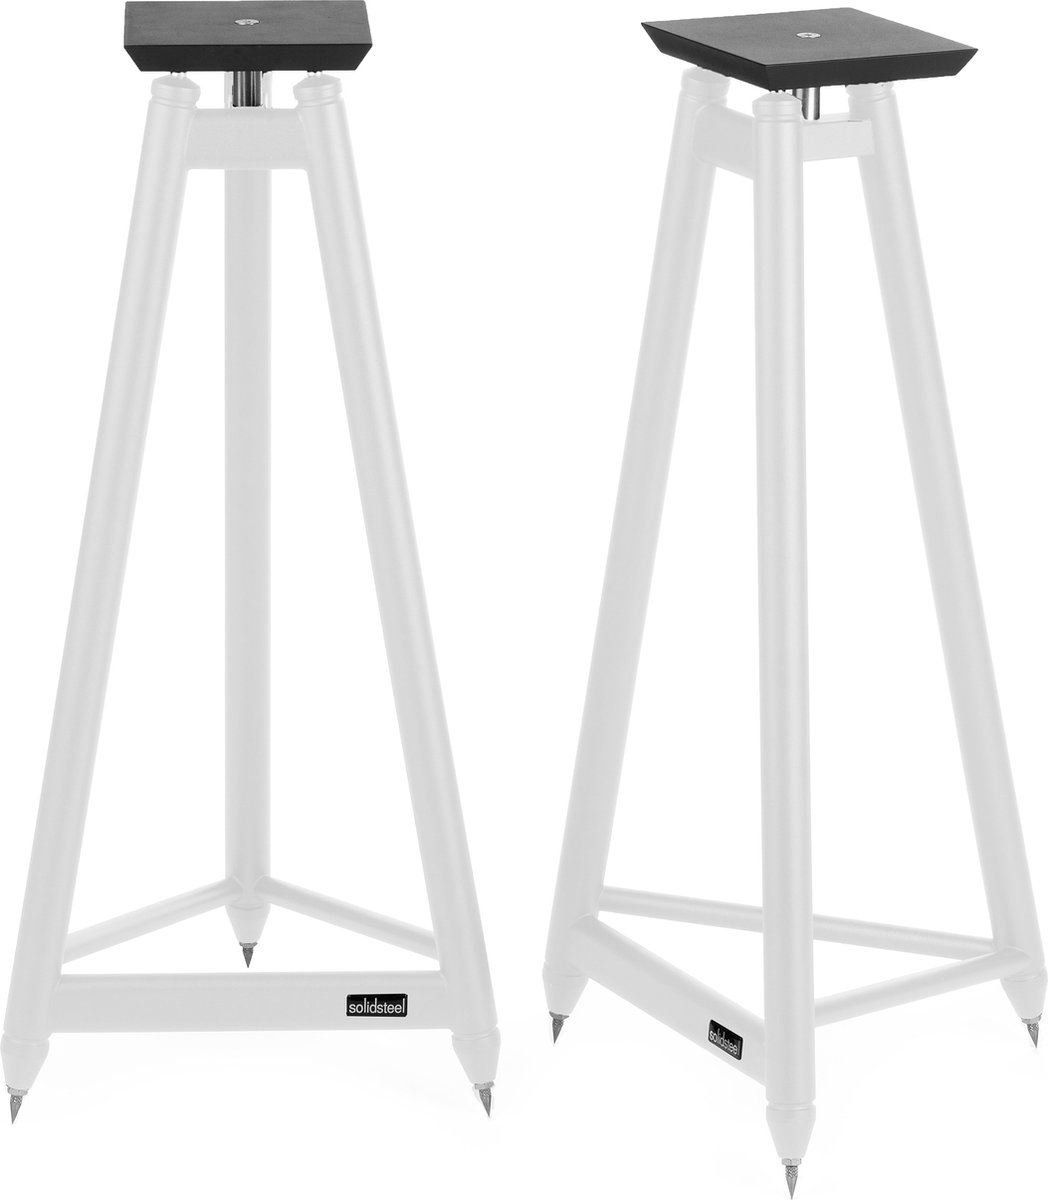 SolidSteel SS-7 boekenplank speakerstandaard (wit)